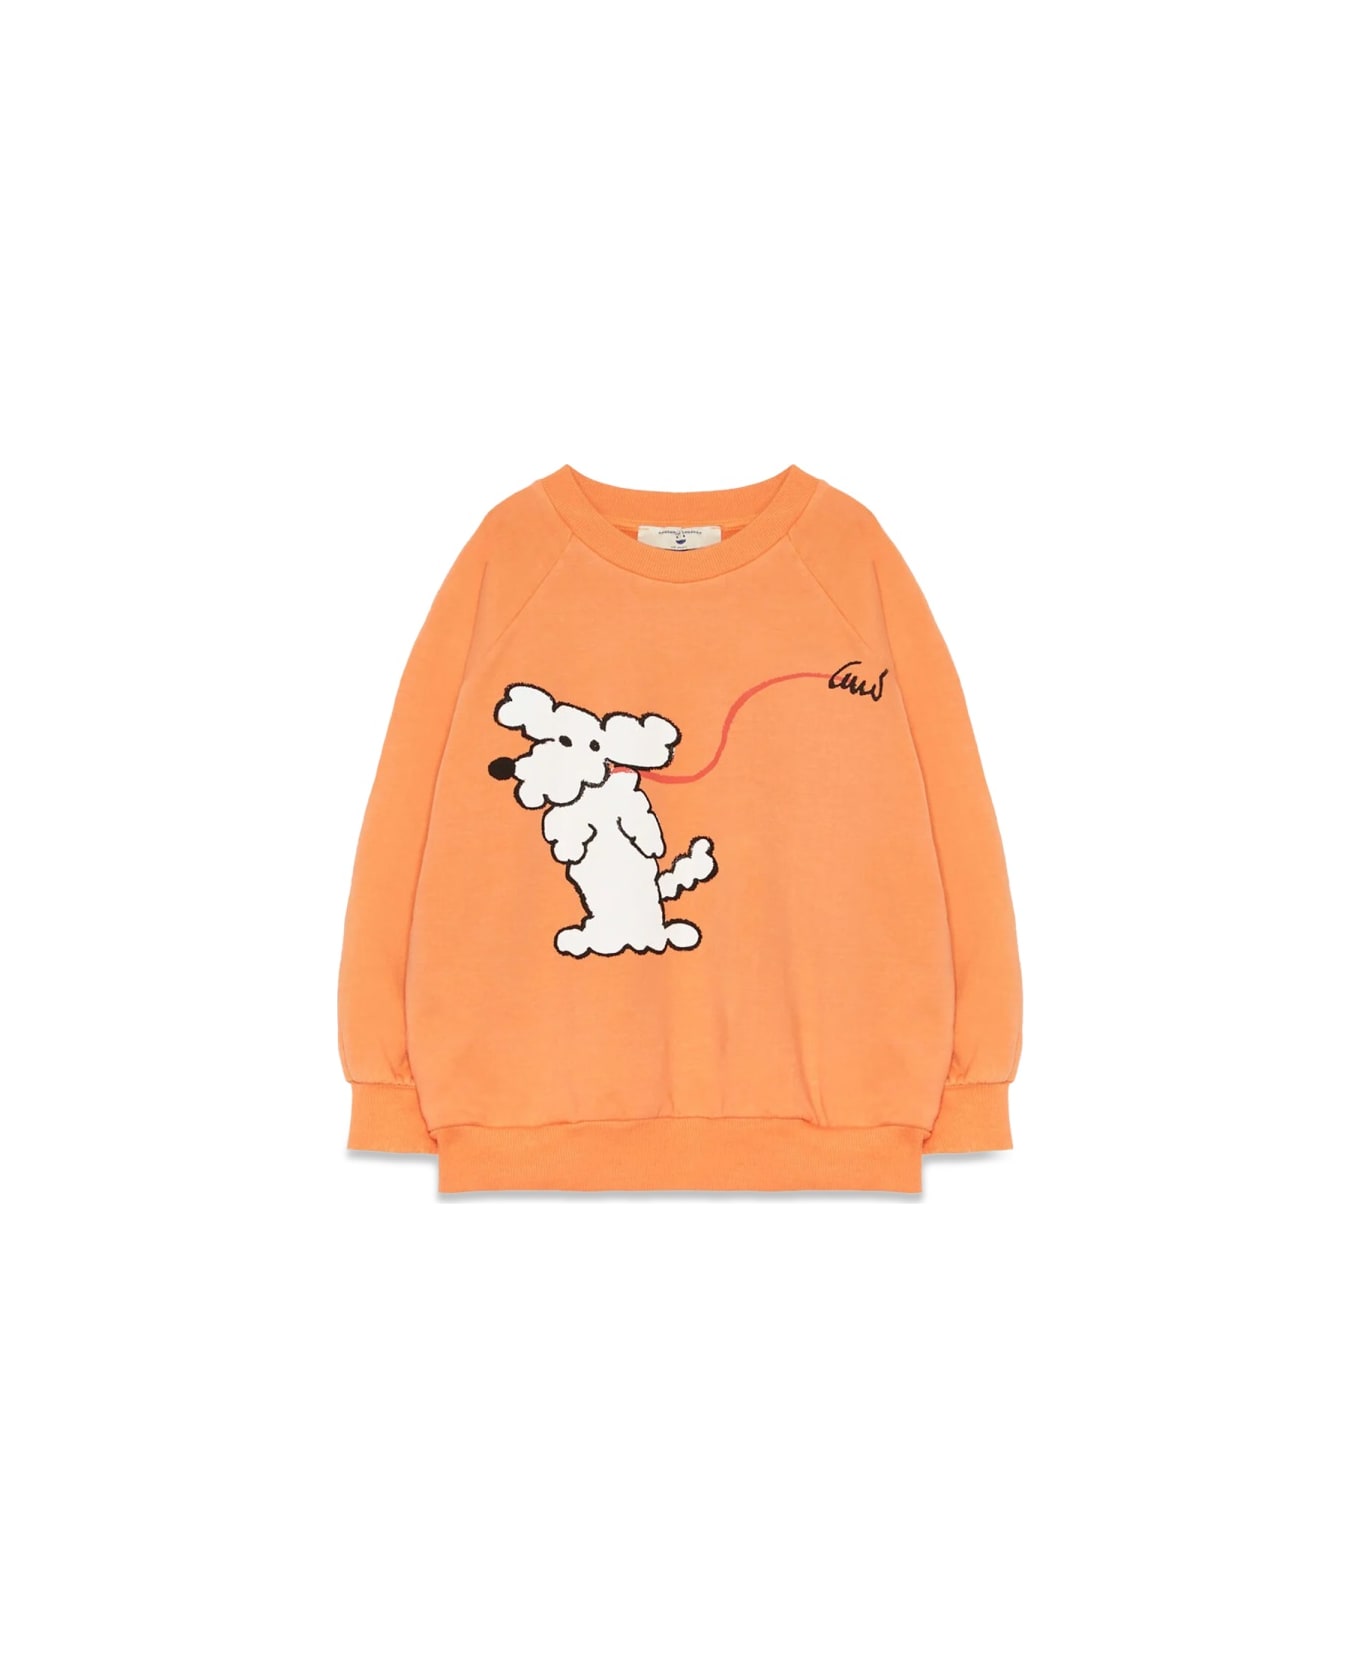 weekend house kids Dog Sweatshirt With Pockets - ORANGE ニットウェア＆スウェットシャツ